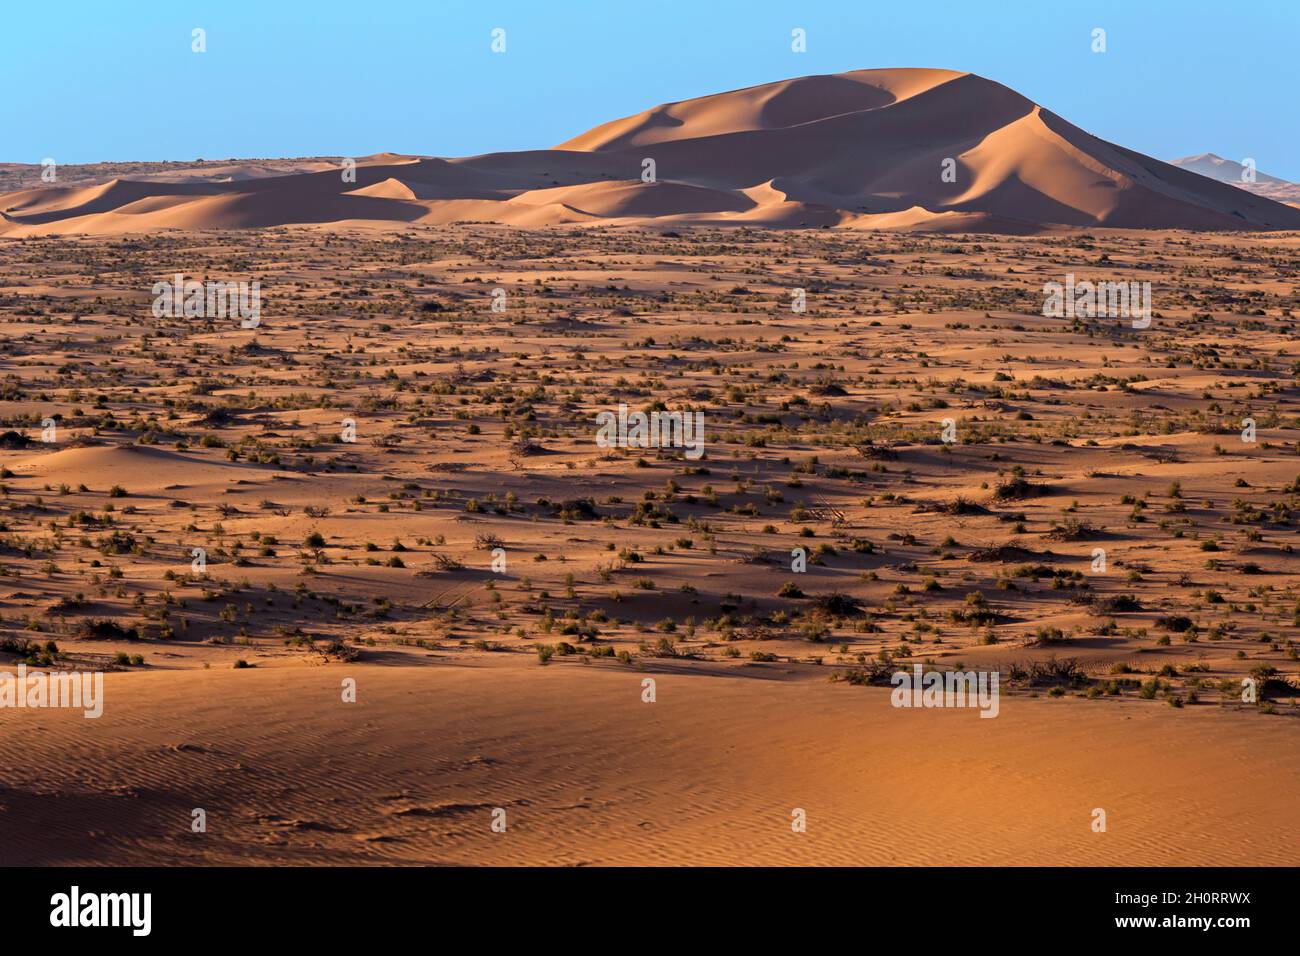 Sand dunes in the desert, Saudi Arabia Stock Photo